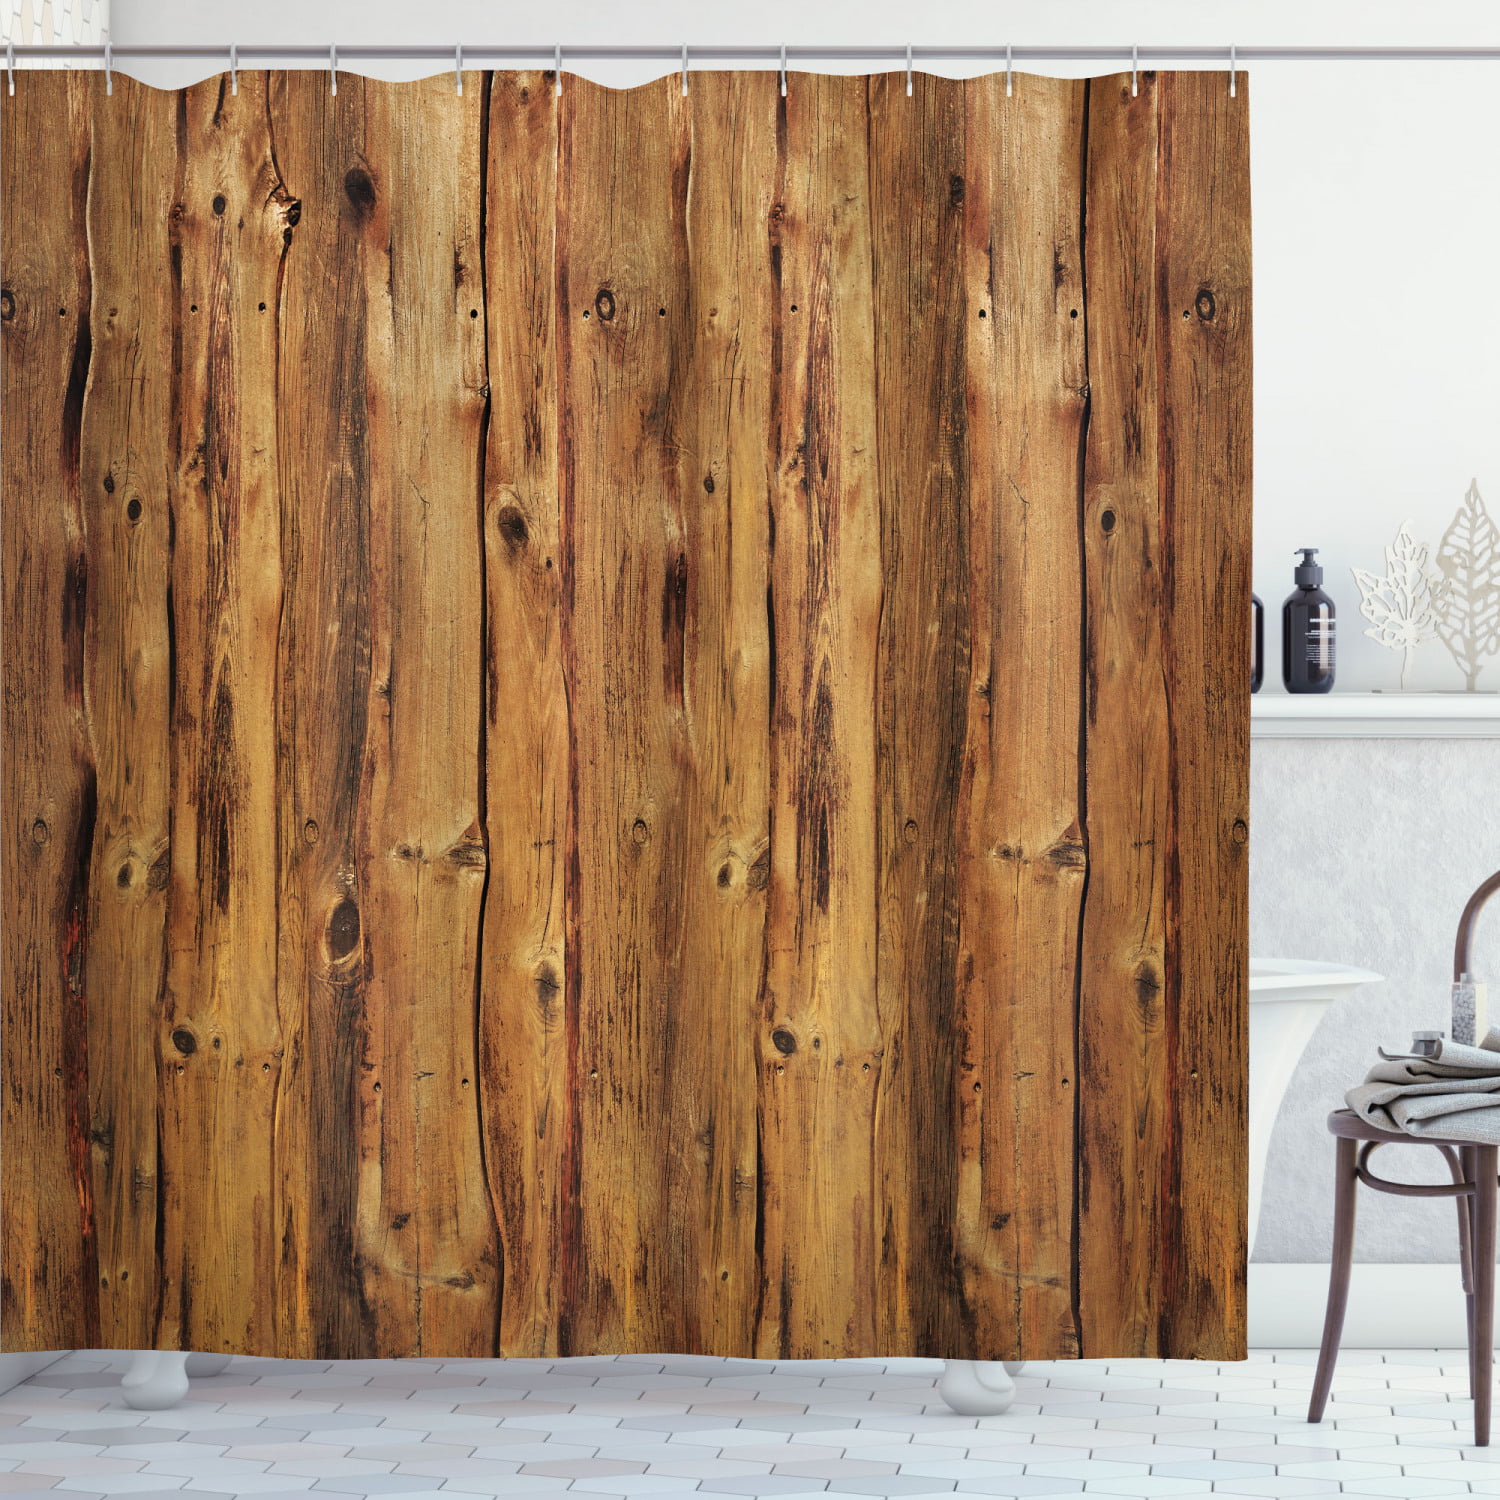 Details about   Wooden Print Shower Curtain Hardwood Floor Natural Rural Graphic Bathroom Set 